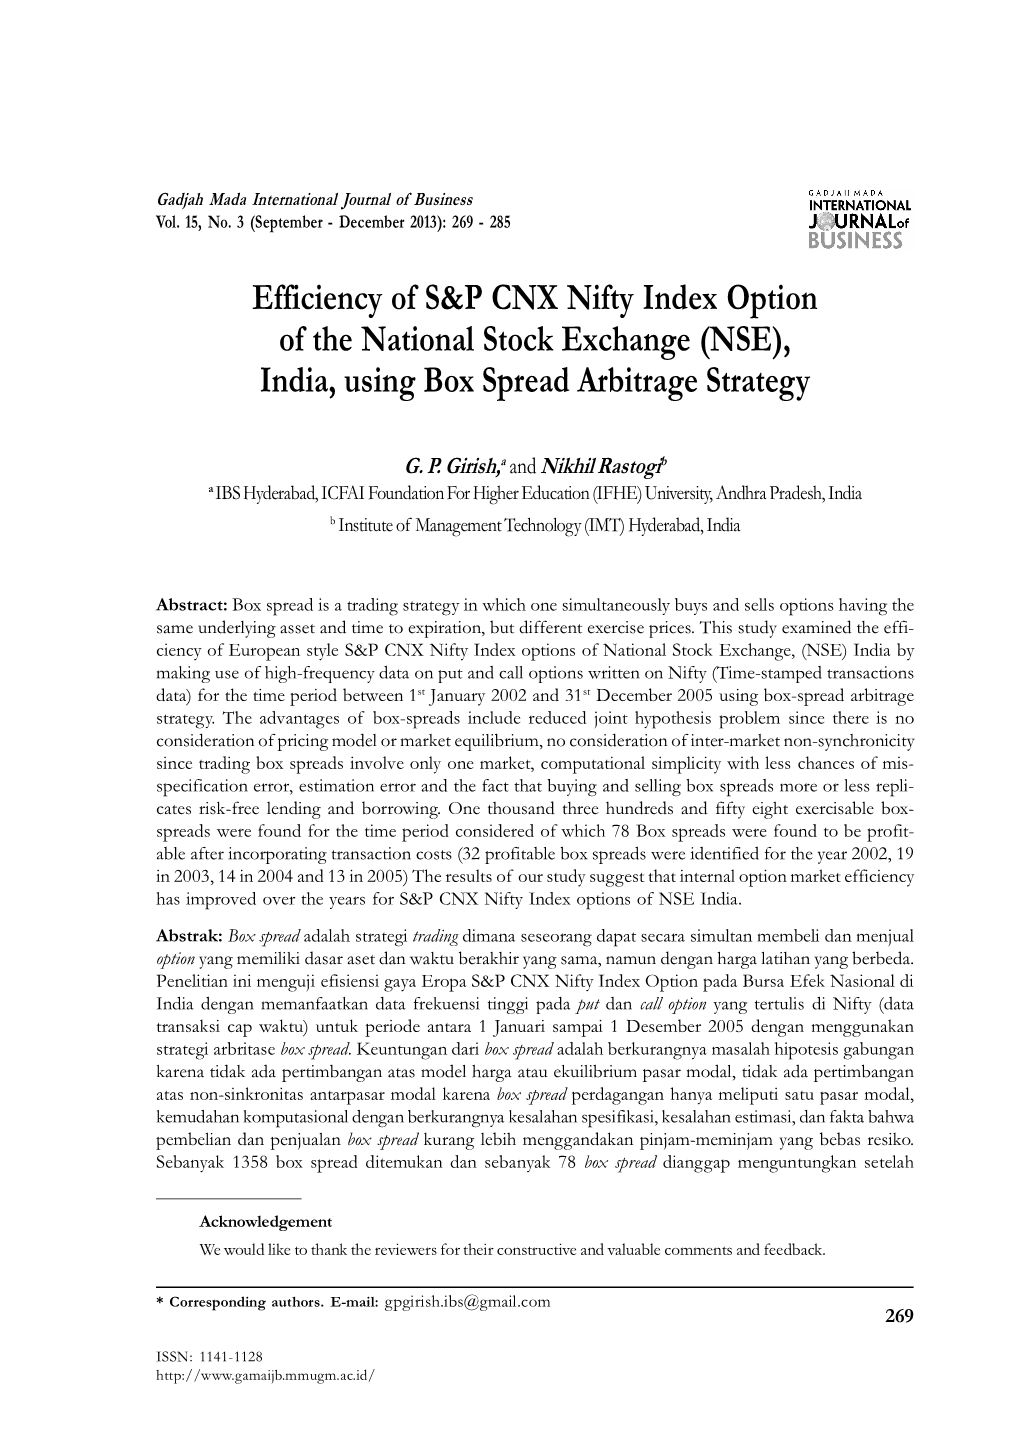 (NSE), India, Using Box Spread Arbitrage Strategy